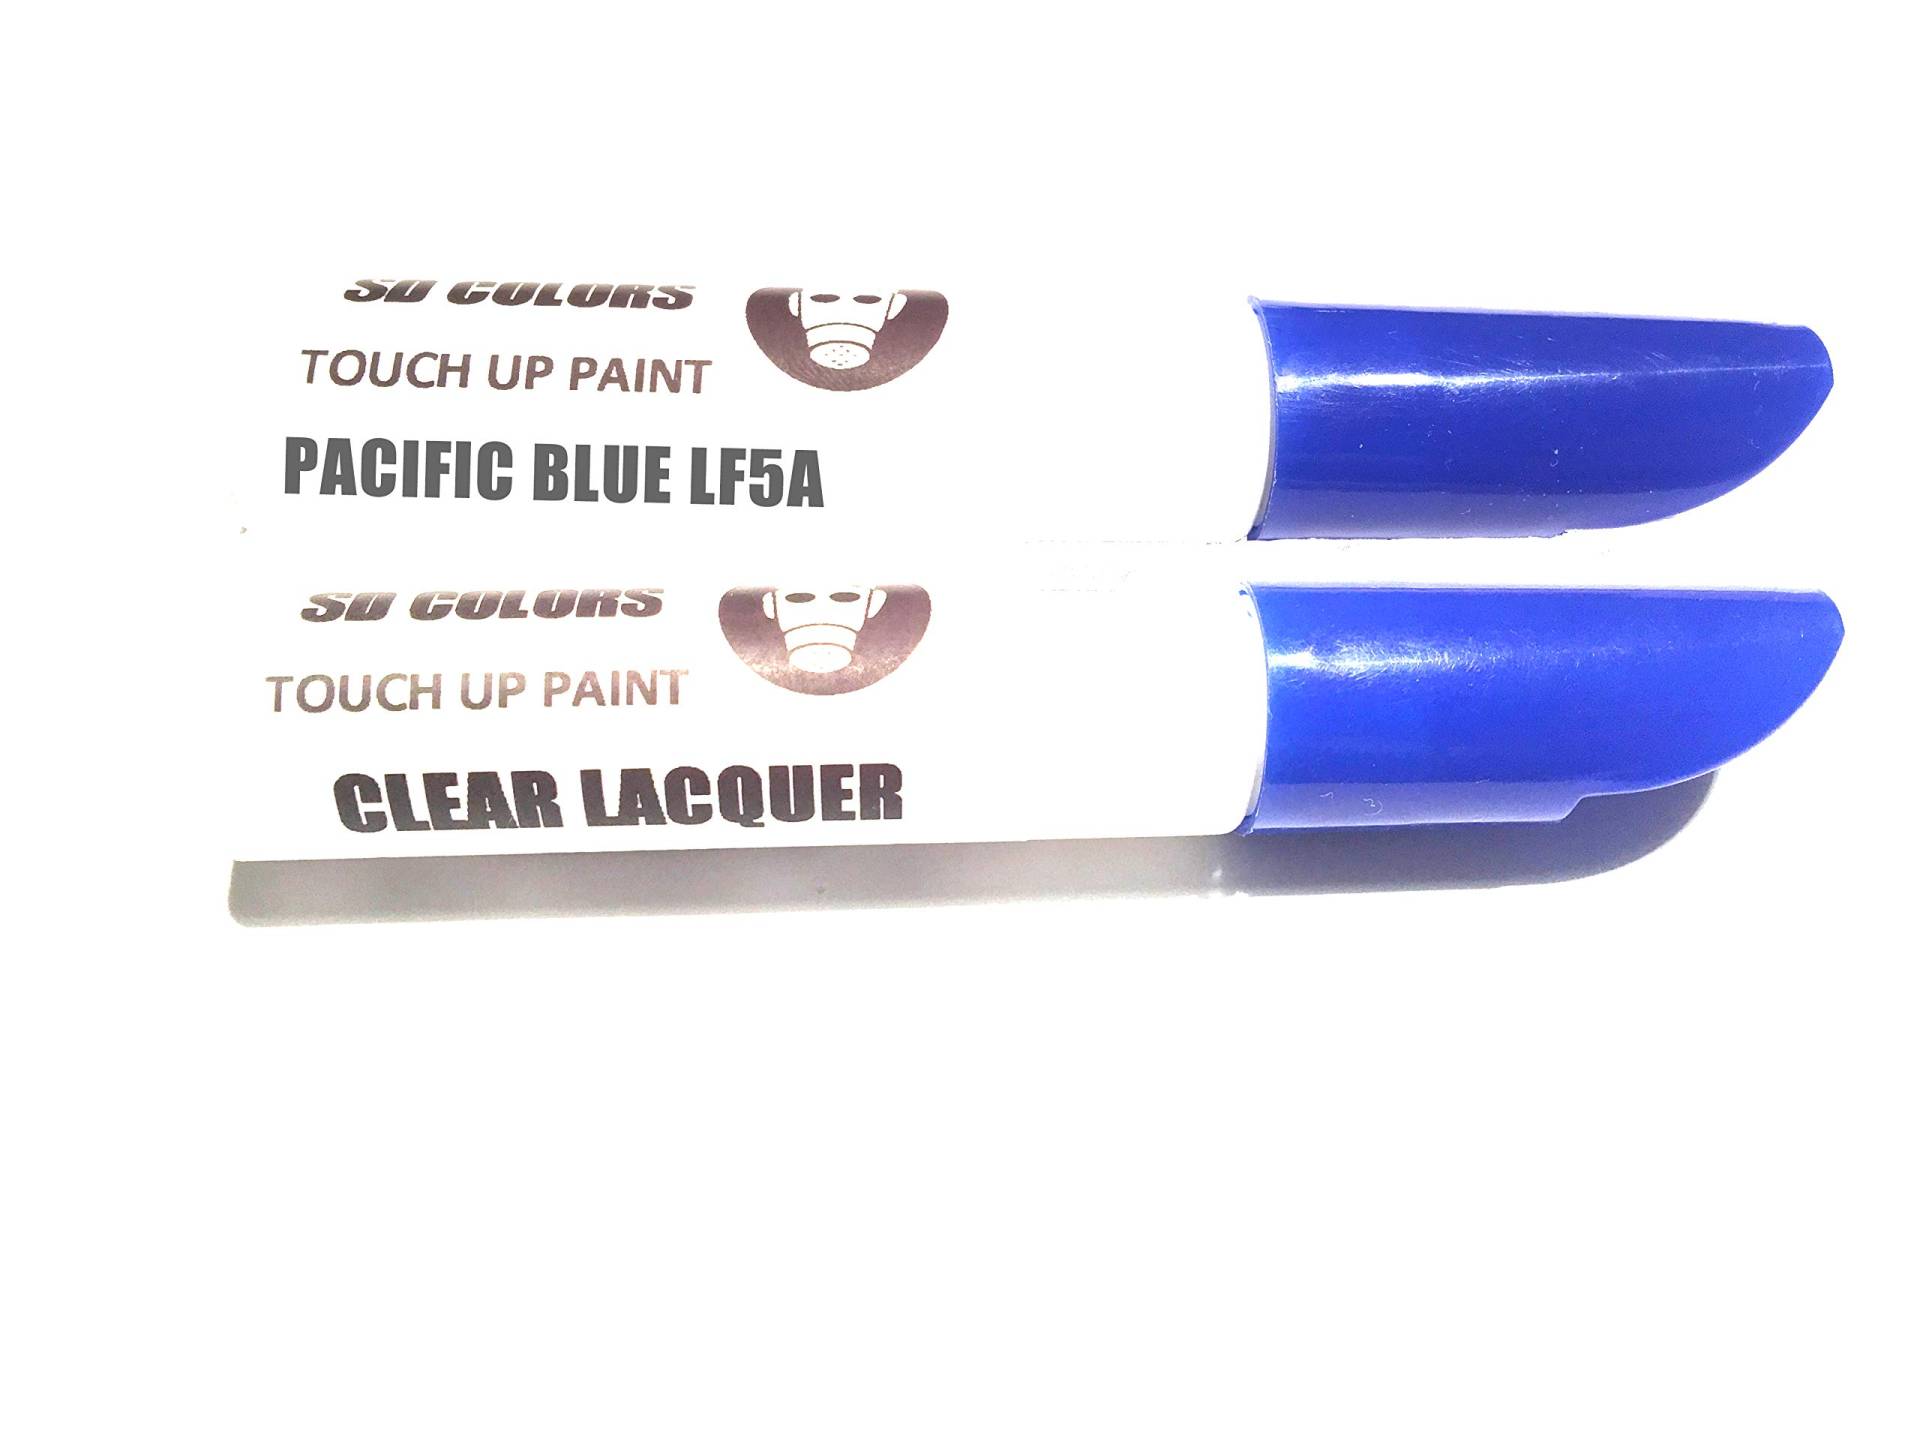 SD COLORS Pacific Blue LF5A Lackstift-Reparatur-Set, 12 ml, mit Pinsel, Farbcode LF5A Pacific Blue (Lack + Lack) von SD COLORS